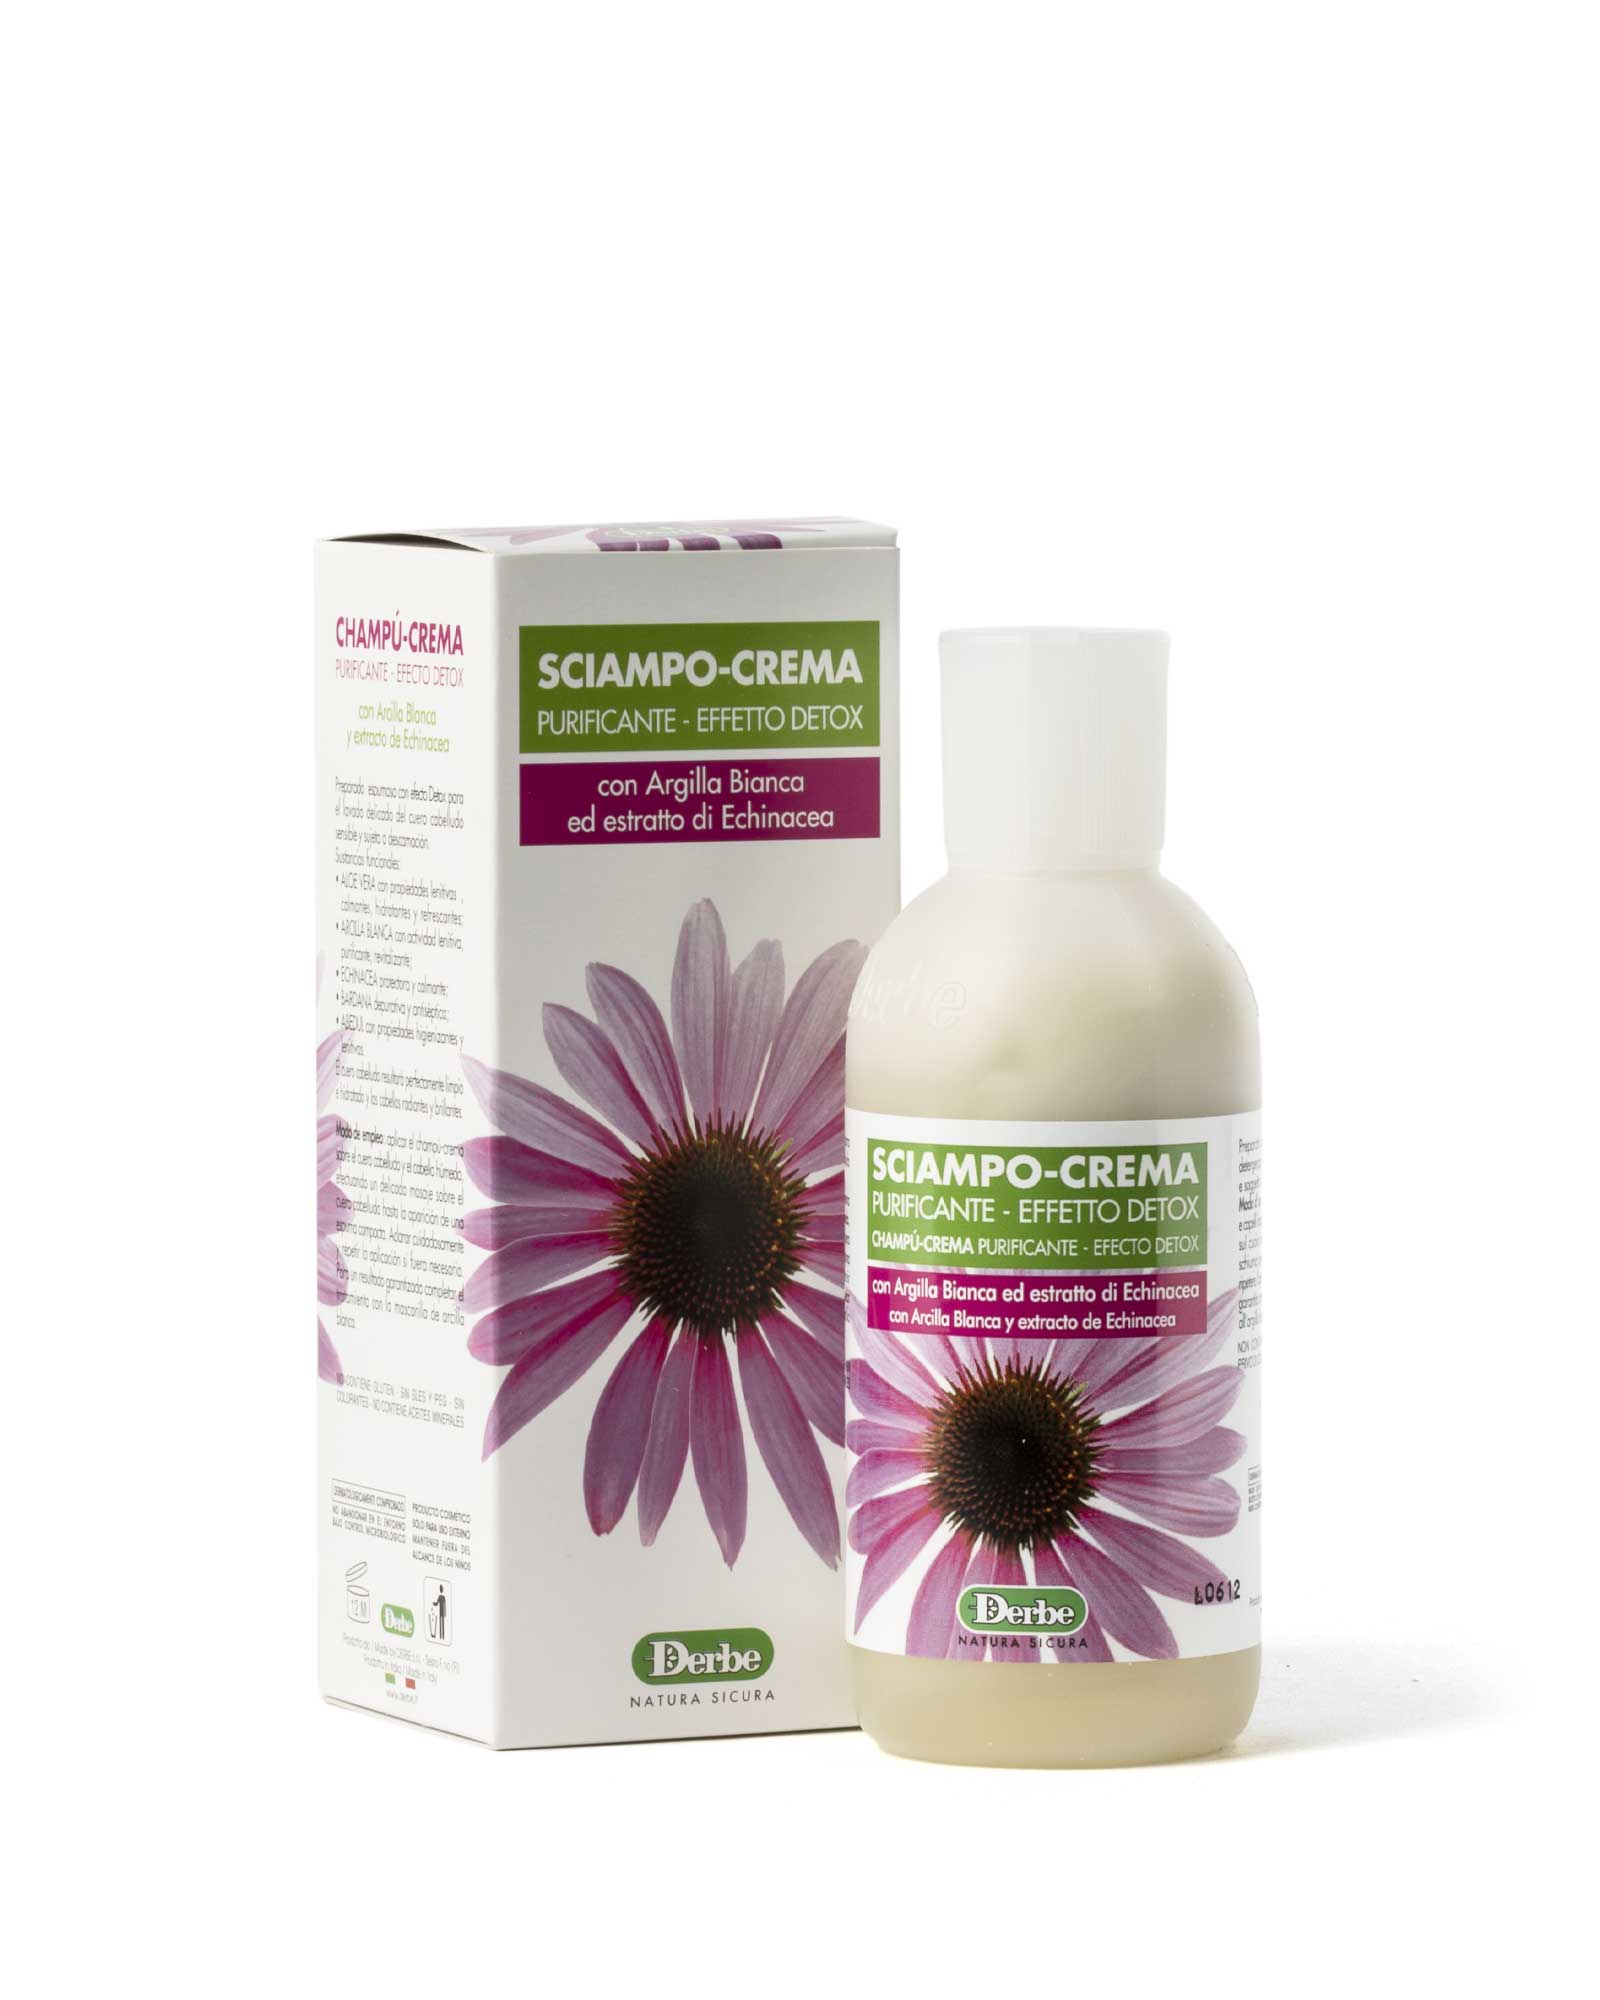 Shampoo crema purificante detox – Derbe